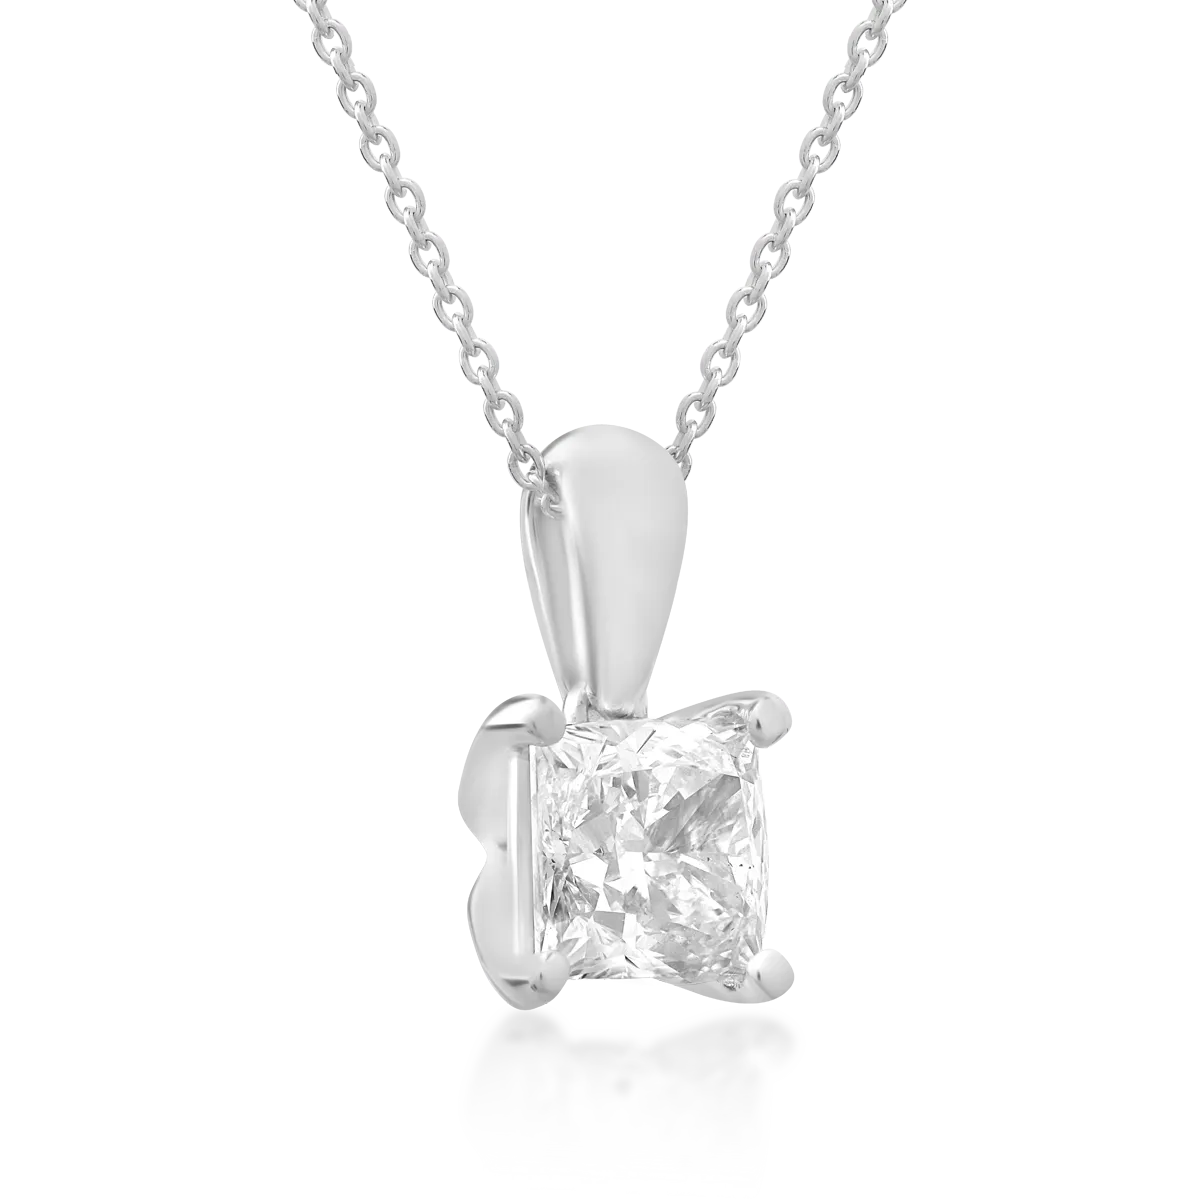 18K white gold pendant chain with 1.03ct diamond